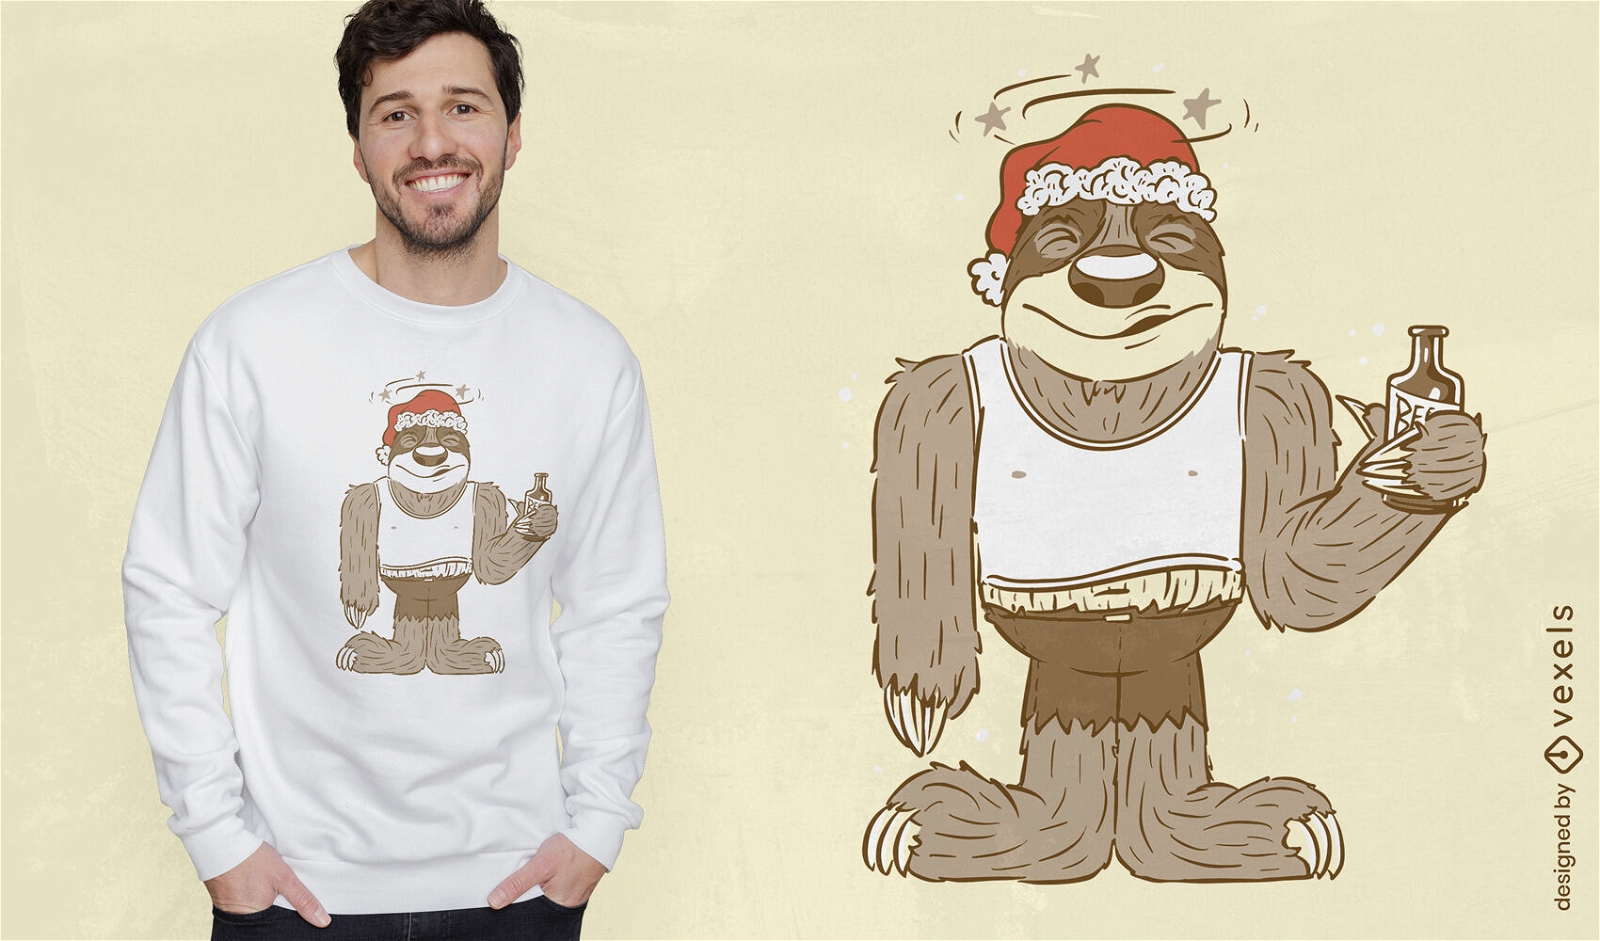 Drunk sloth with Santa's hat t-shirt design